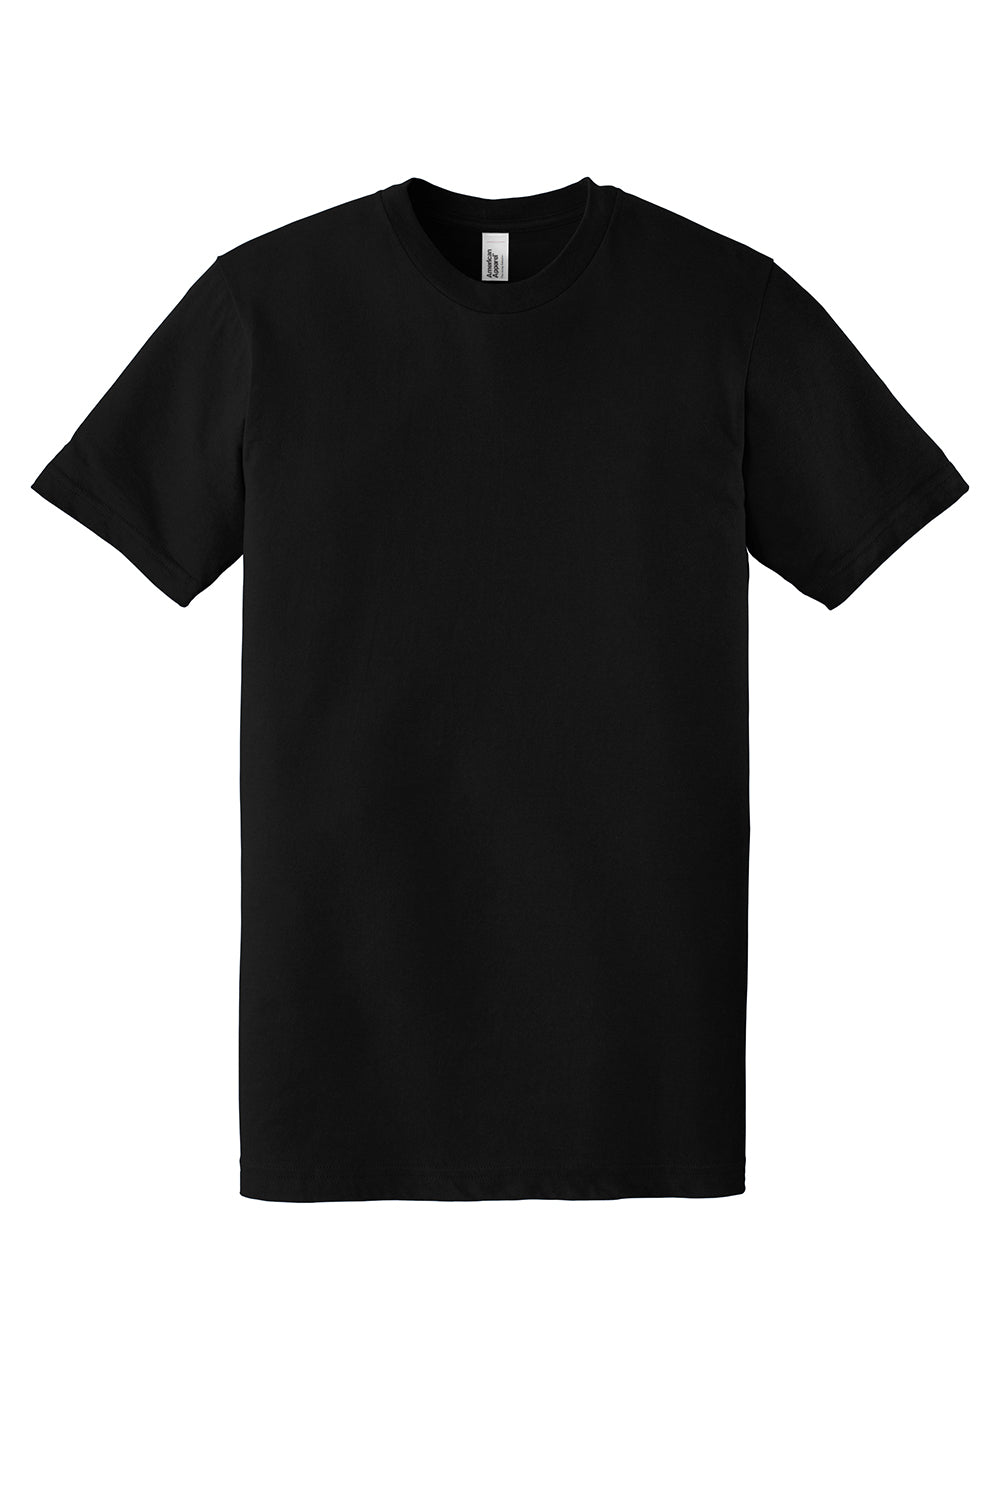 American Apparel 2001 Mens Fine Jersey Short Sleeve Crewneck T-Shirt Black Flat Front